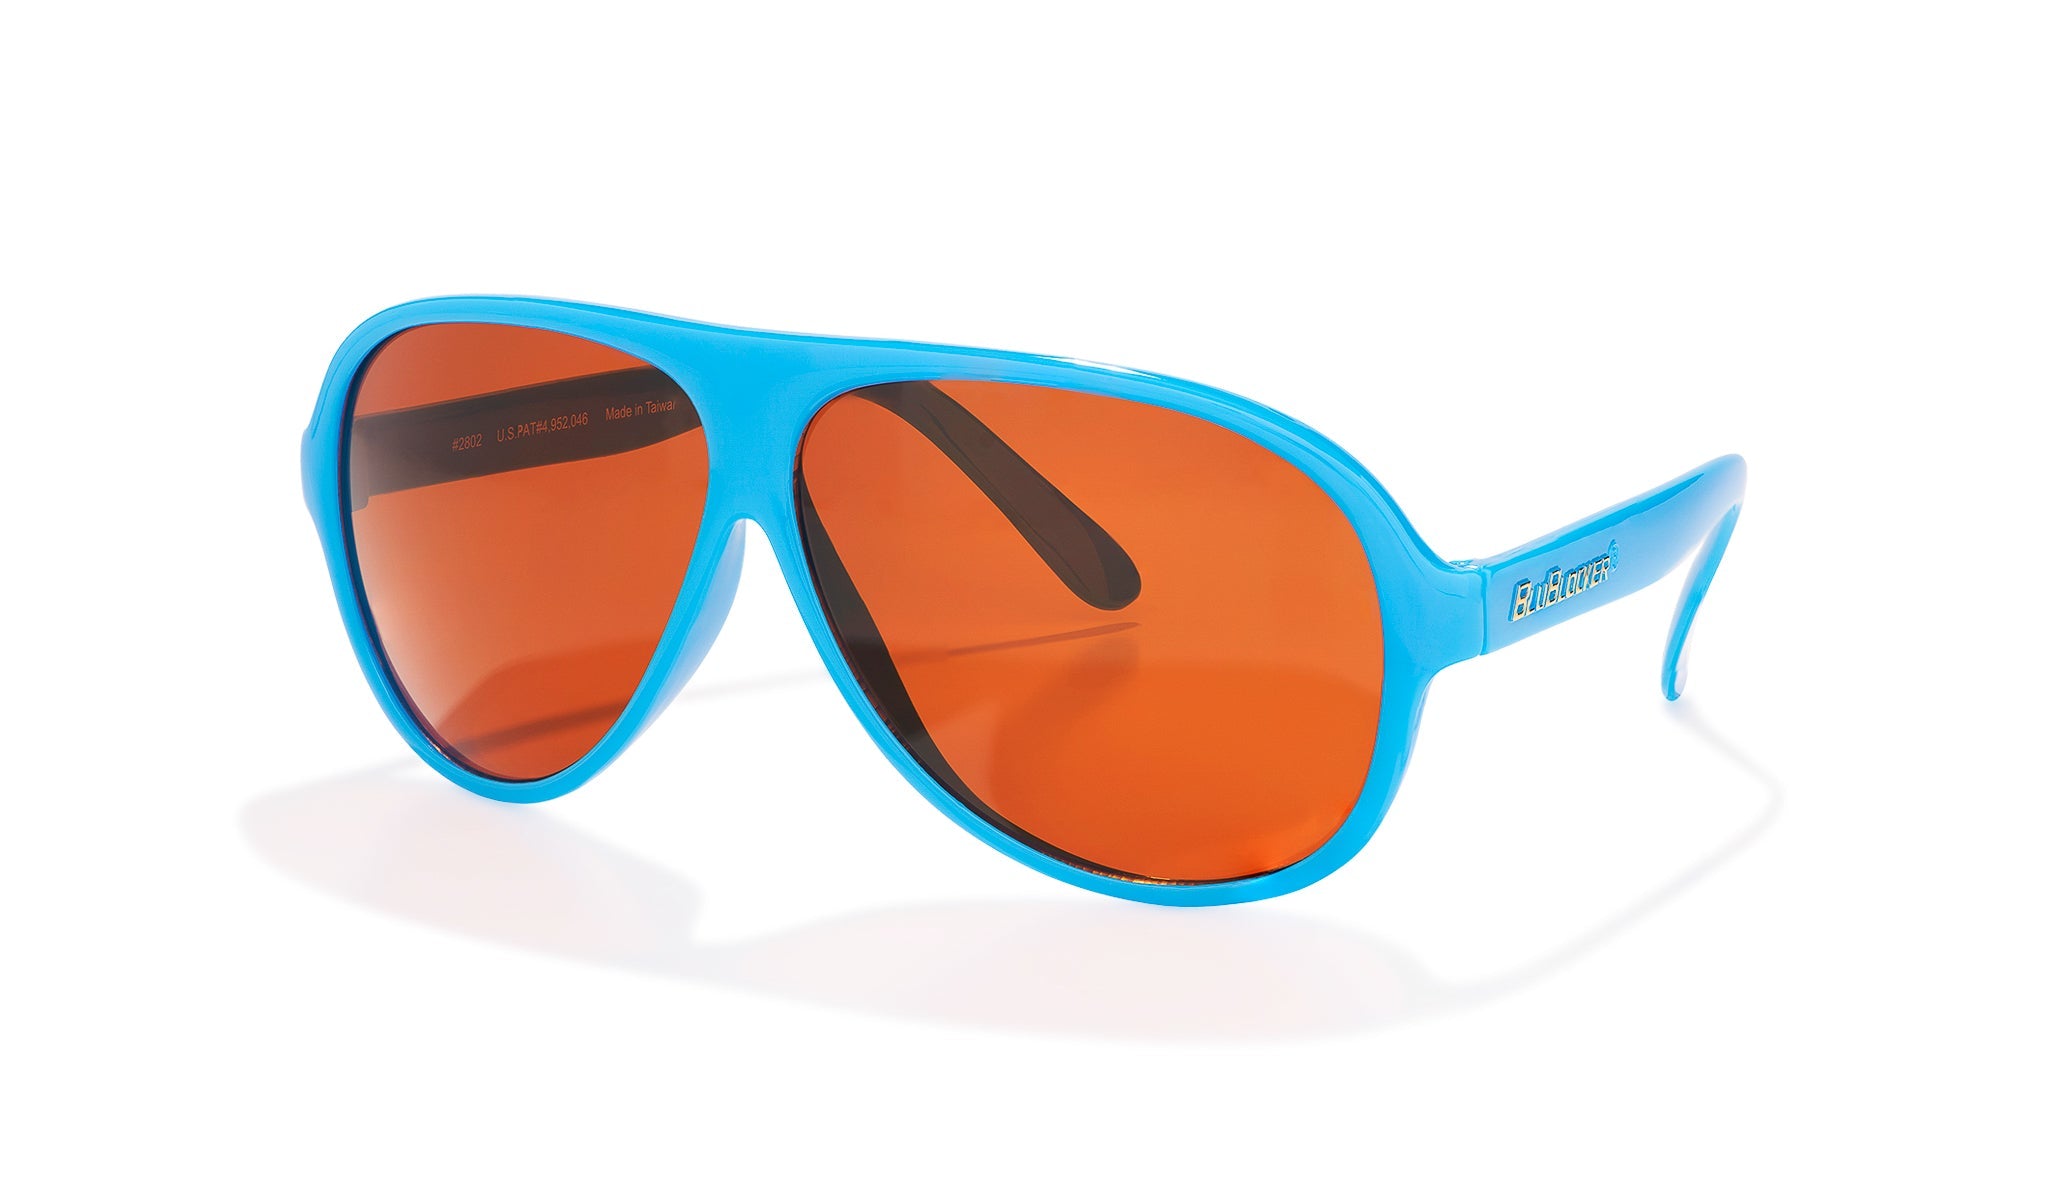 Best Sun Protection for the Beach or Mountain - Blu Blocker Sunglasses